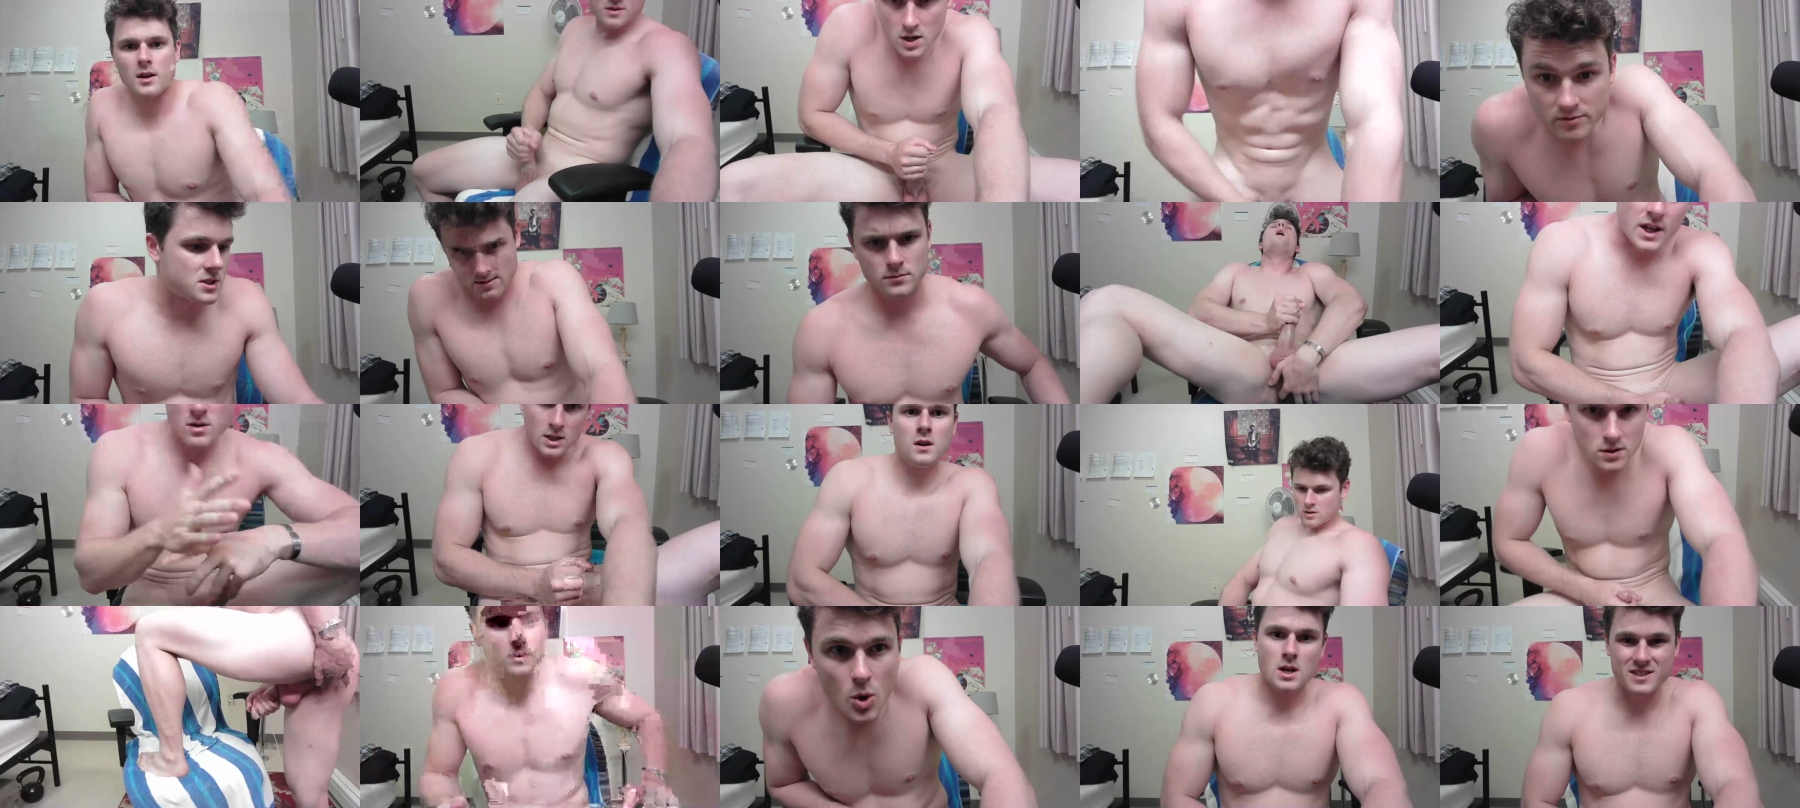 Duke_Bronson  25-08-2021 Male Topless